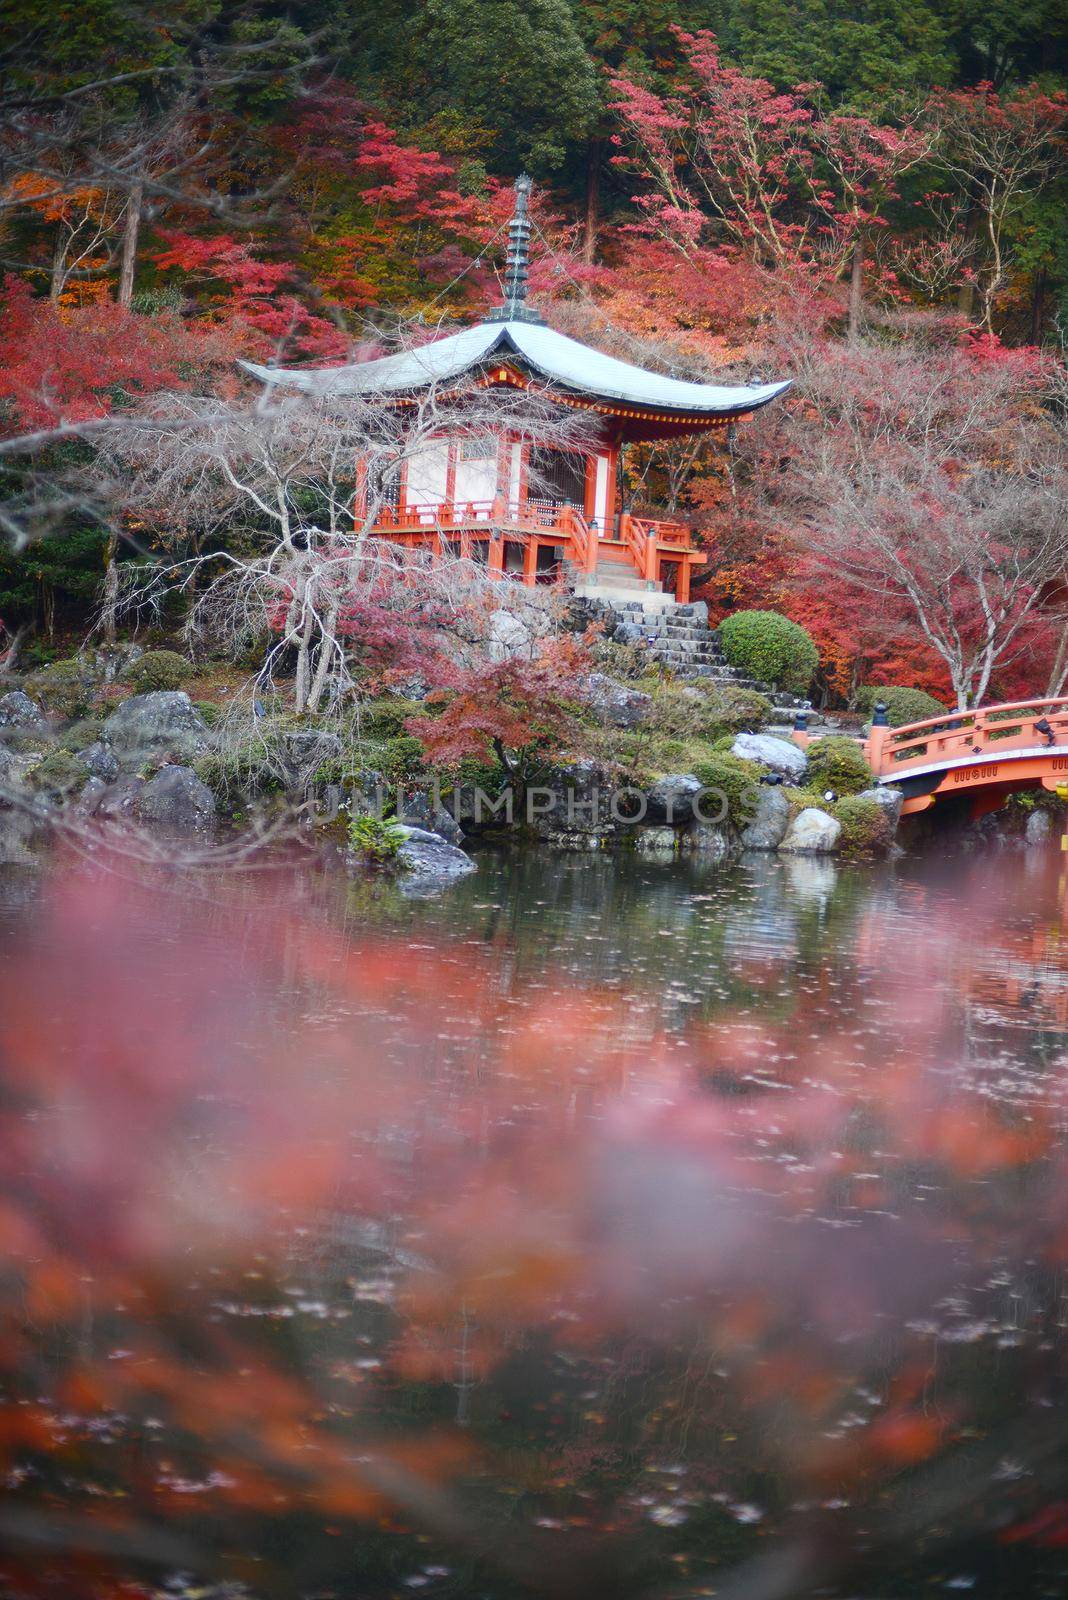 japanese building in Daigoji temple in kyoto with autumn scene